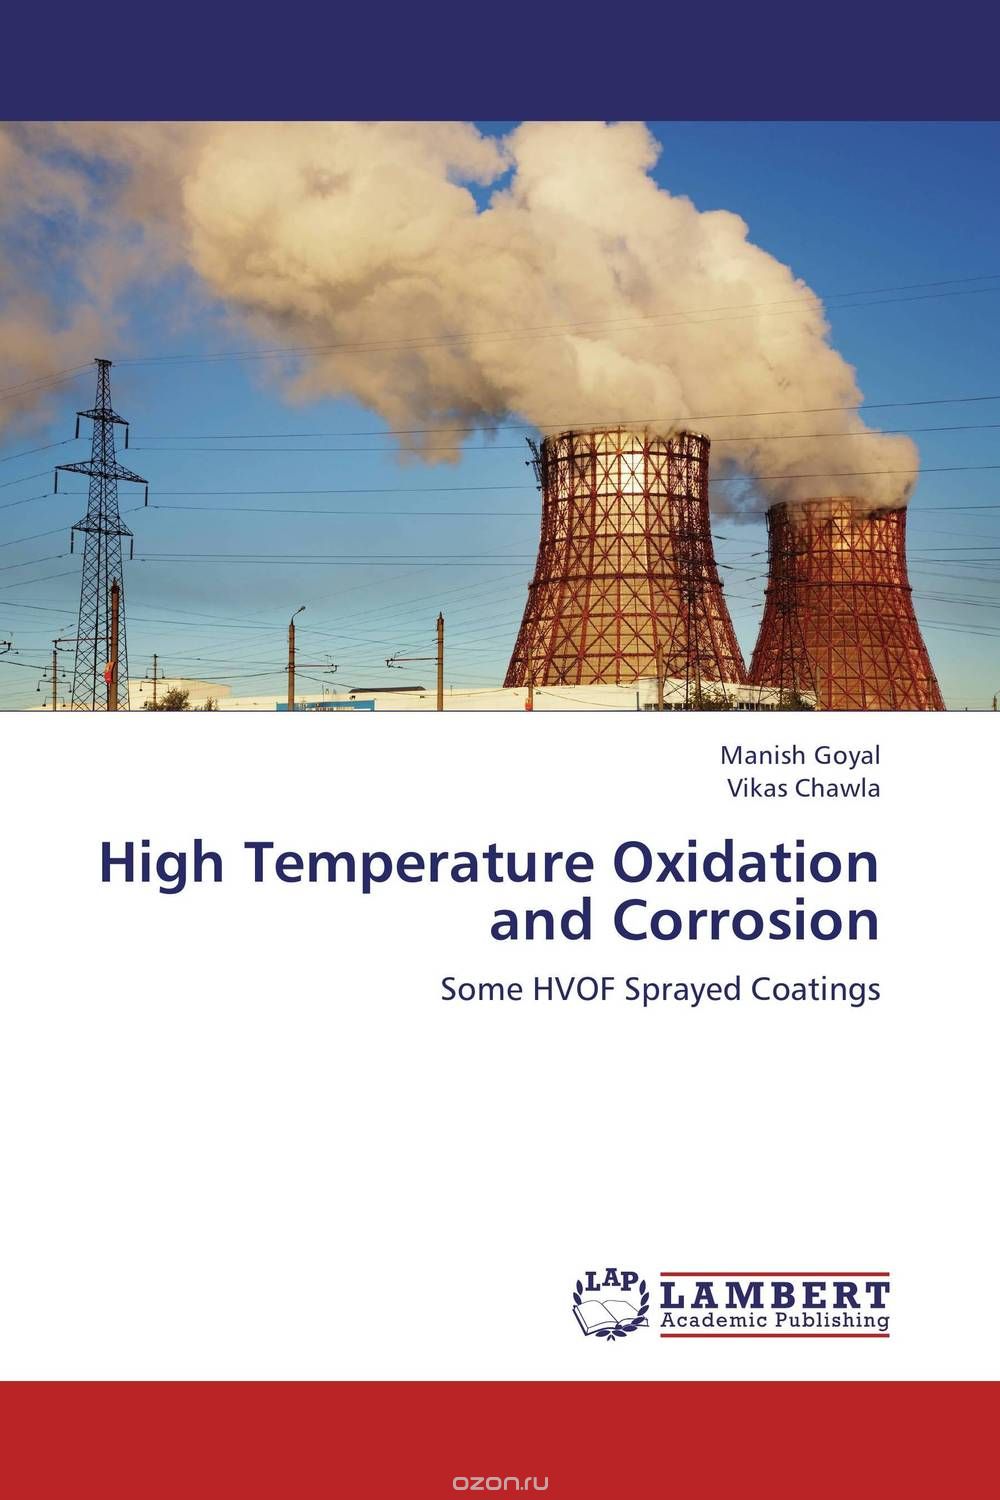 Скачать книгу "High Temperature Oxidation and Corrosion"